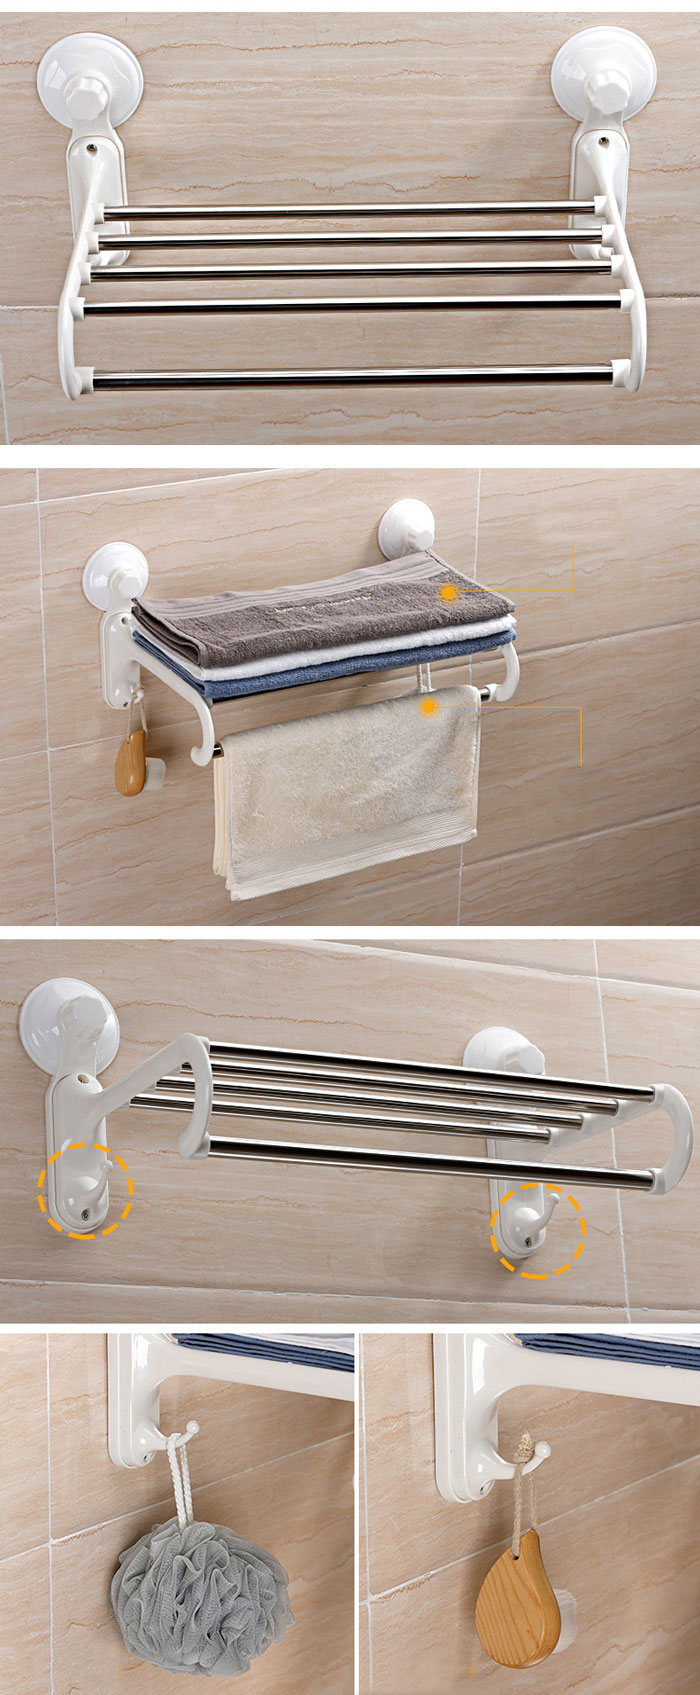 Stainless Steel Towel Bar Wall-Mounted Towel Rack